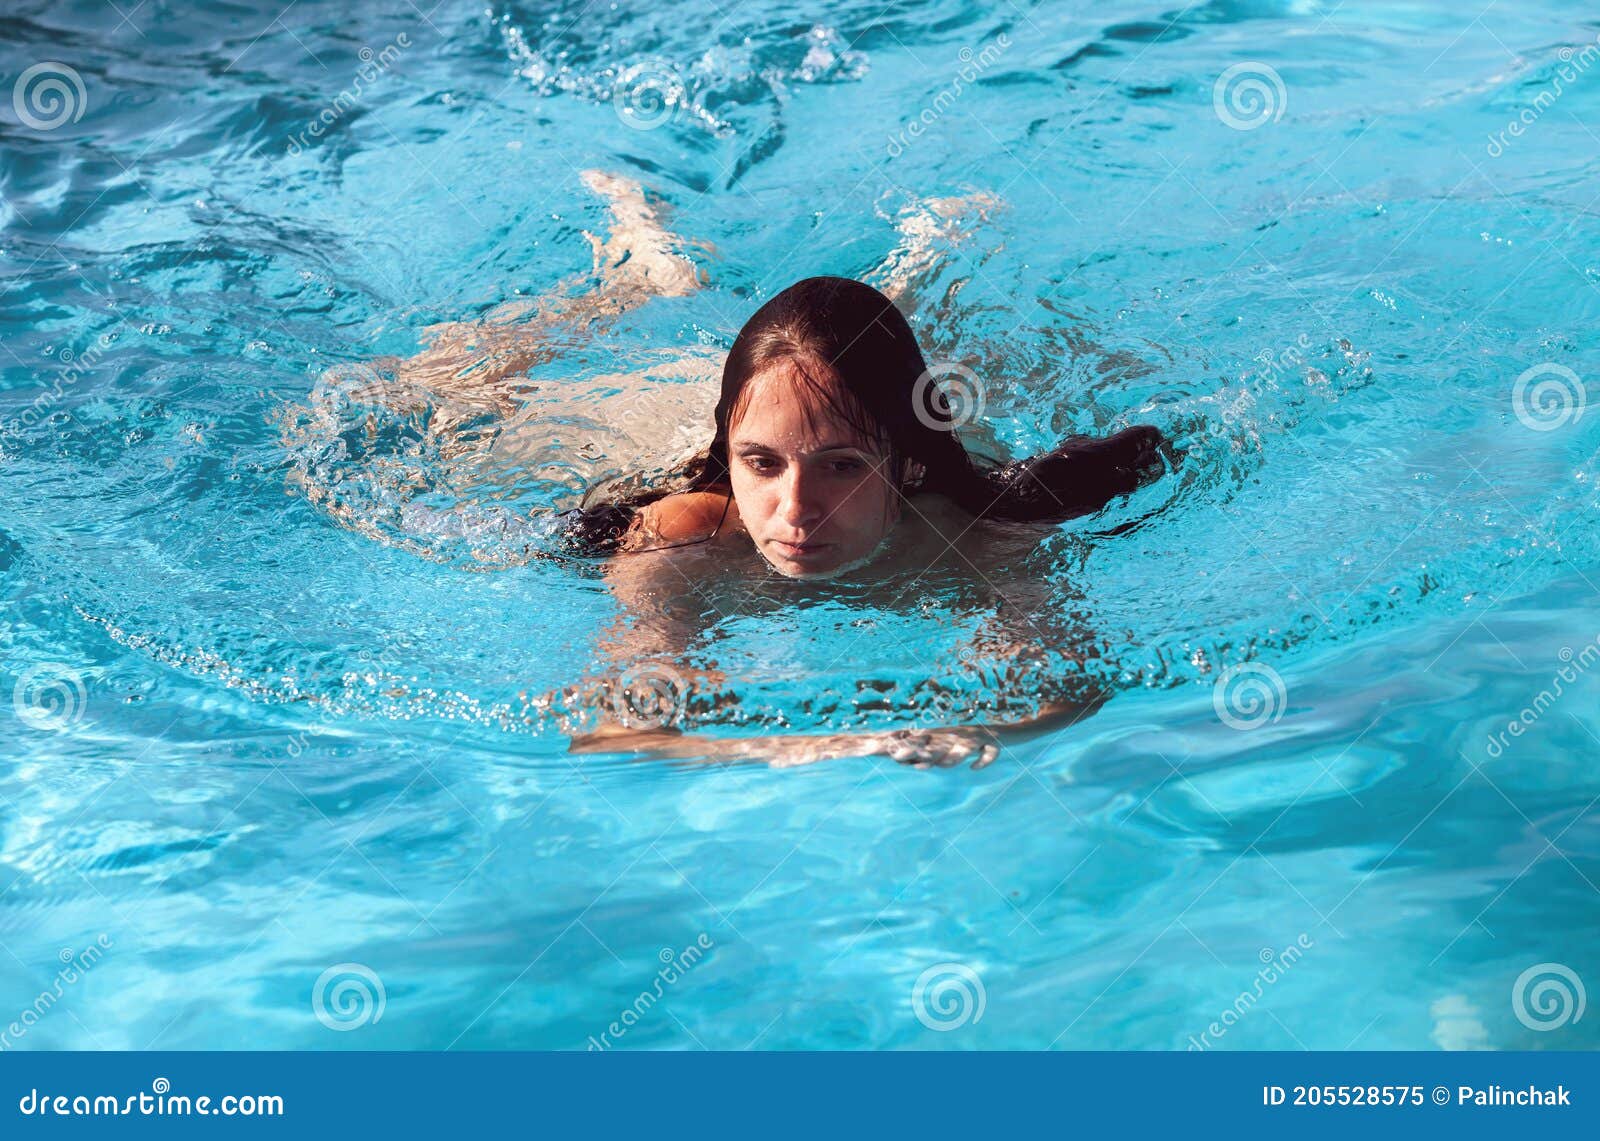 amy schilz add photo swimming in the nude